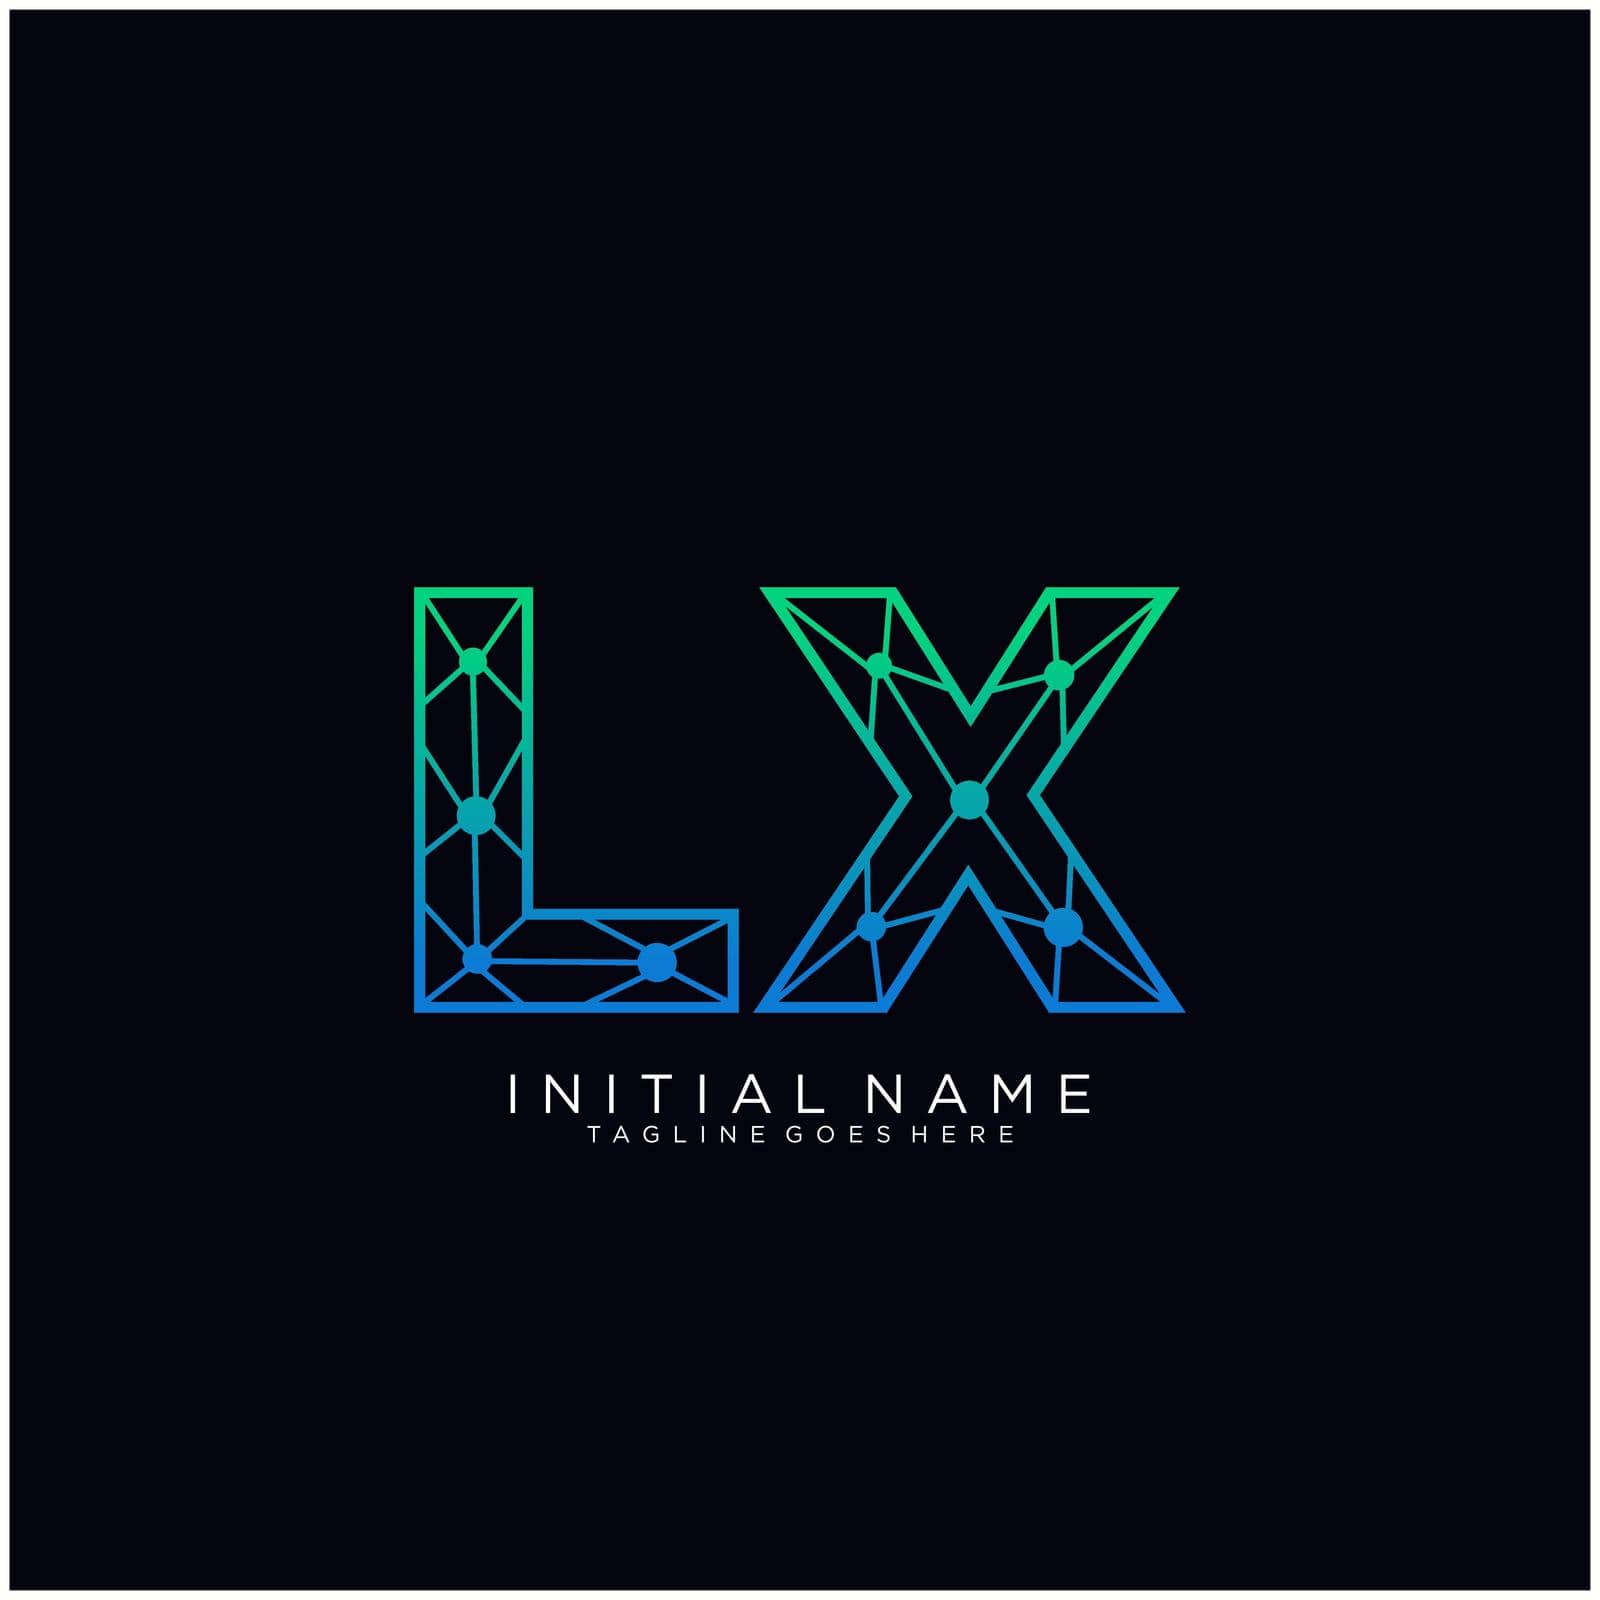 LX Letter logo icon design template elements by liaanniesatul